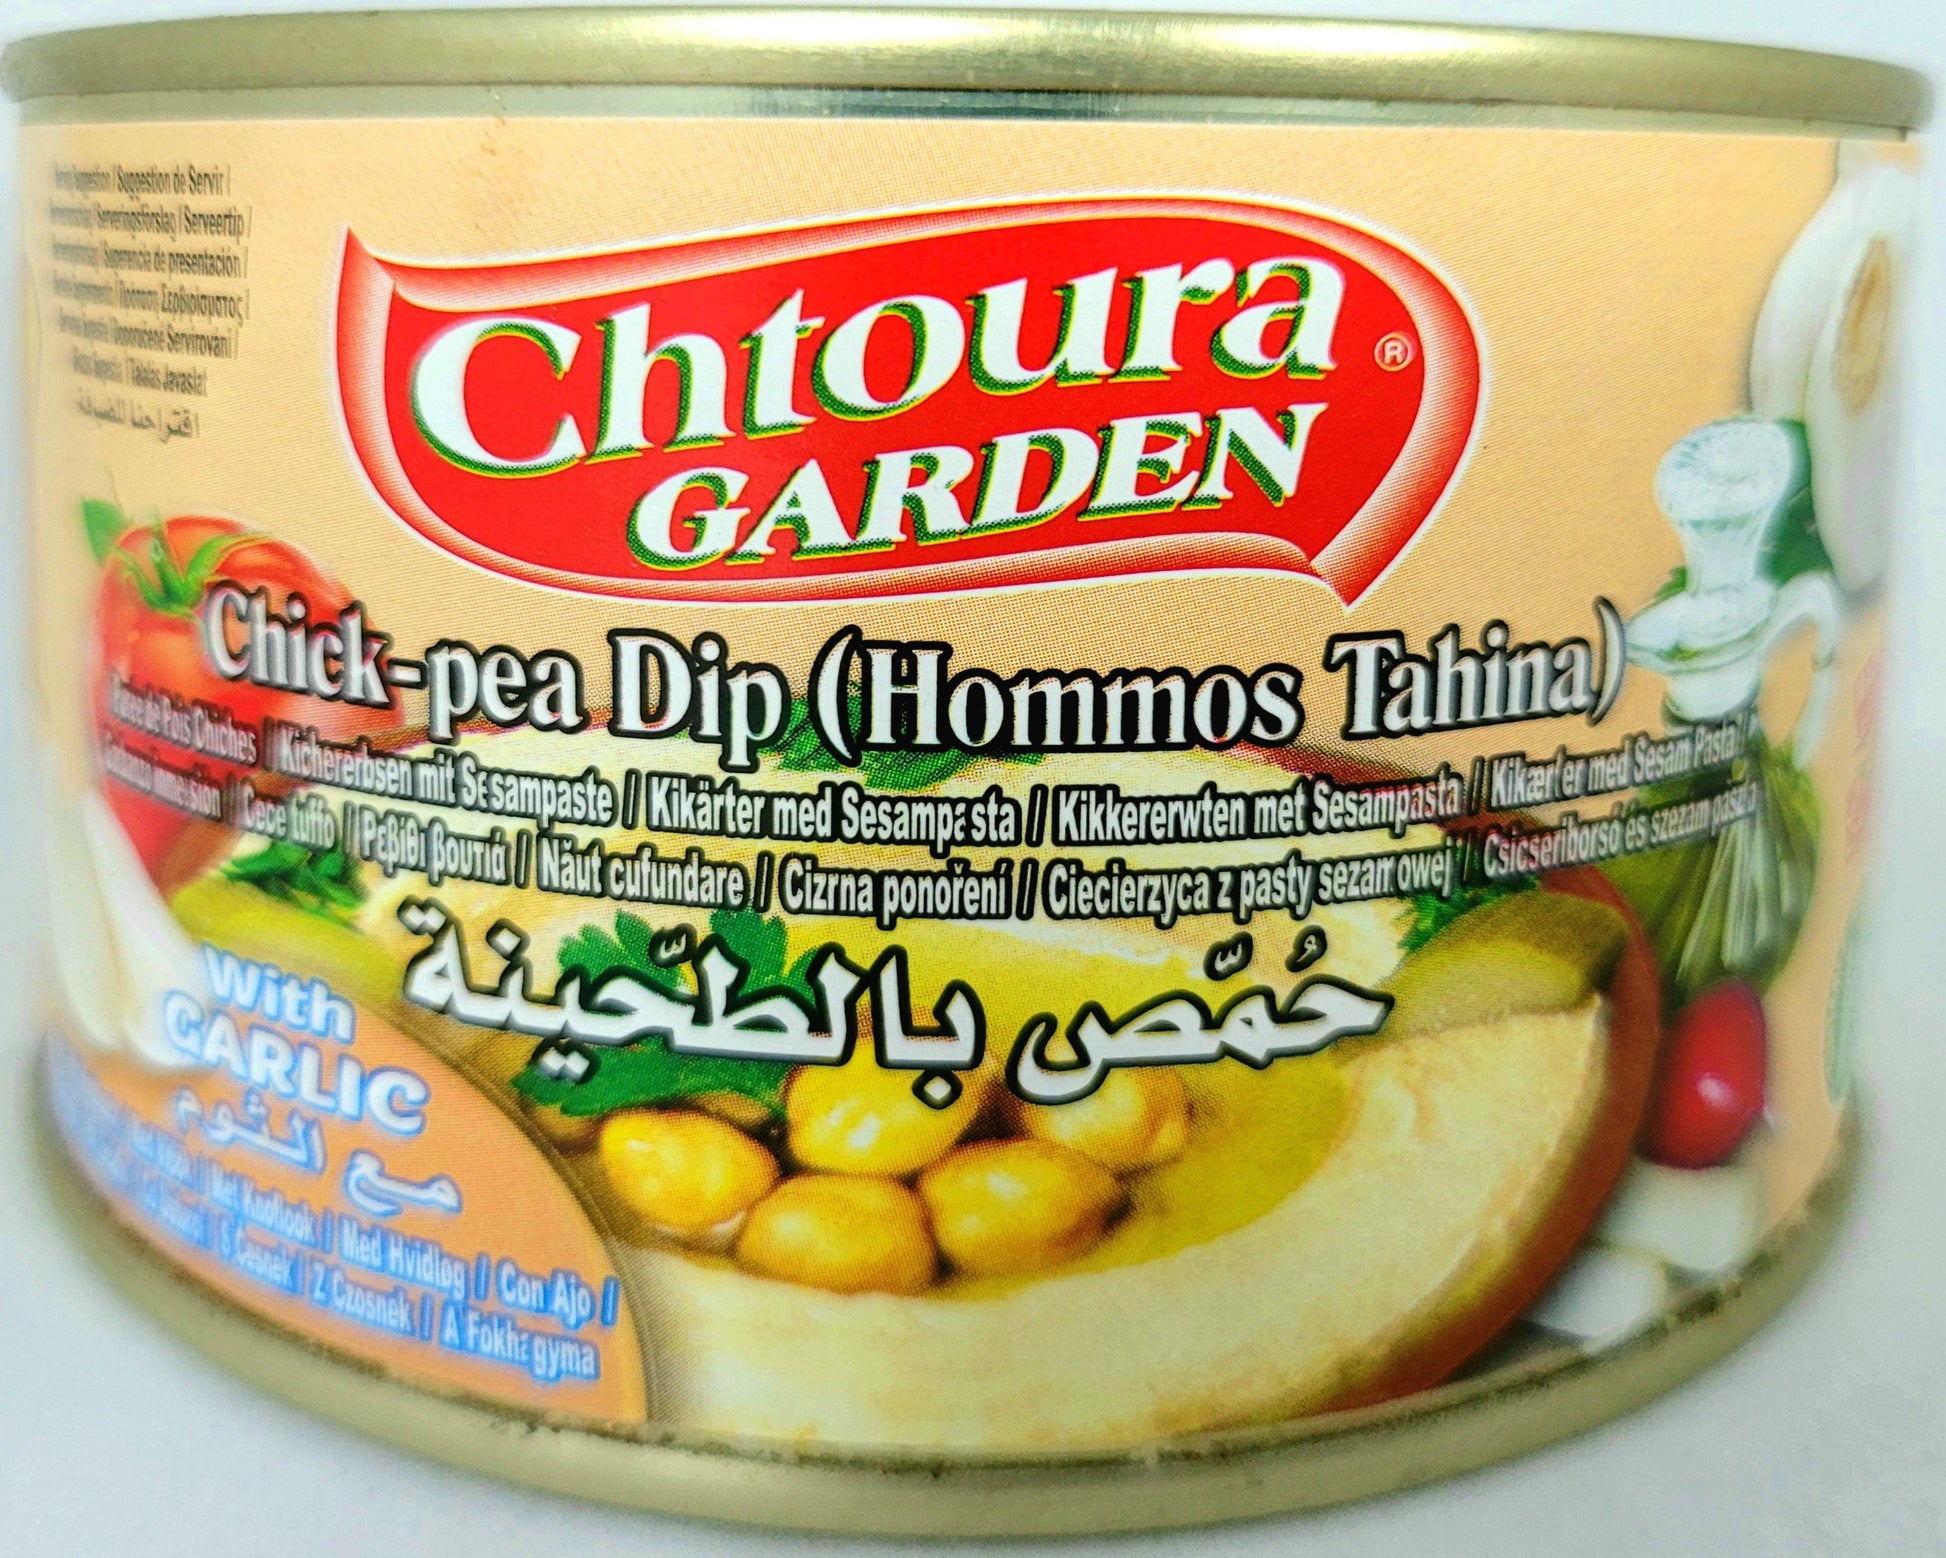 Chtoura Garden Chickpeas Dip Hommos Tahina with Garlic 420g - Arabian Shopping Zone